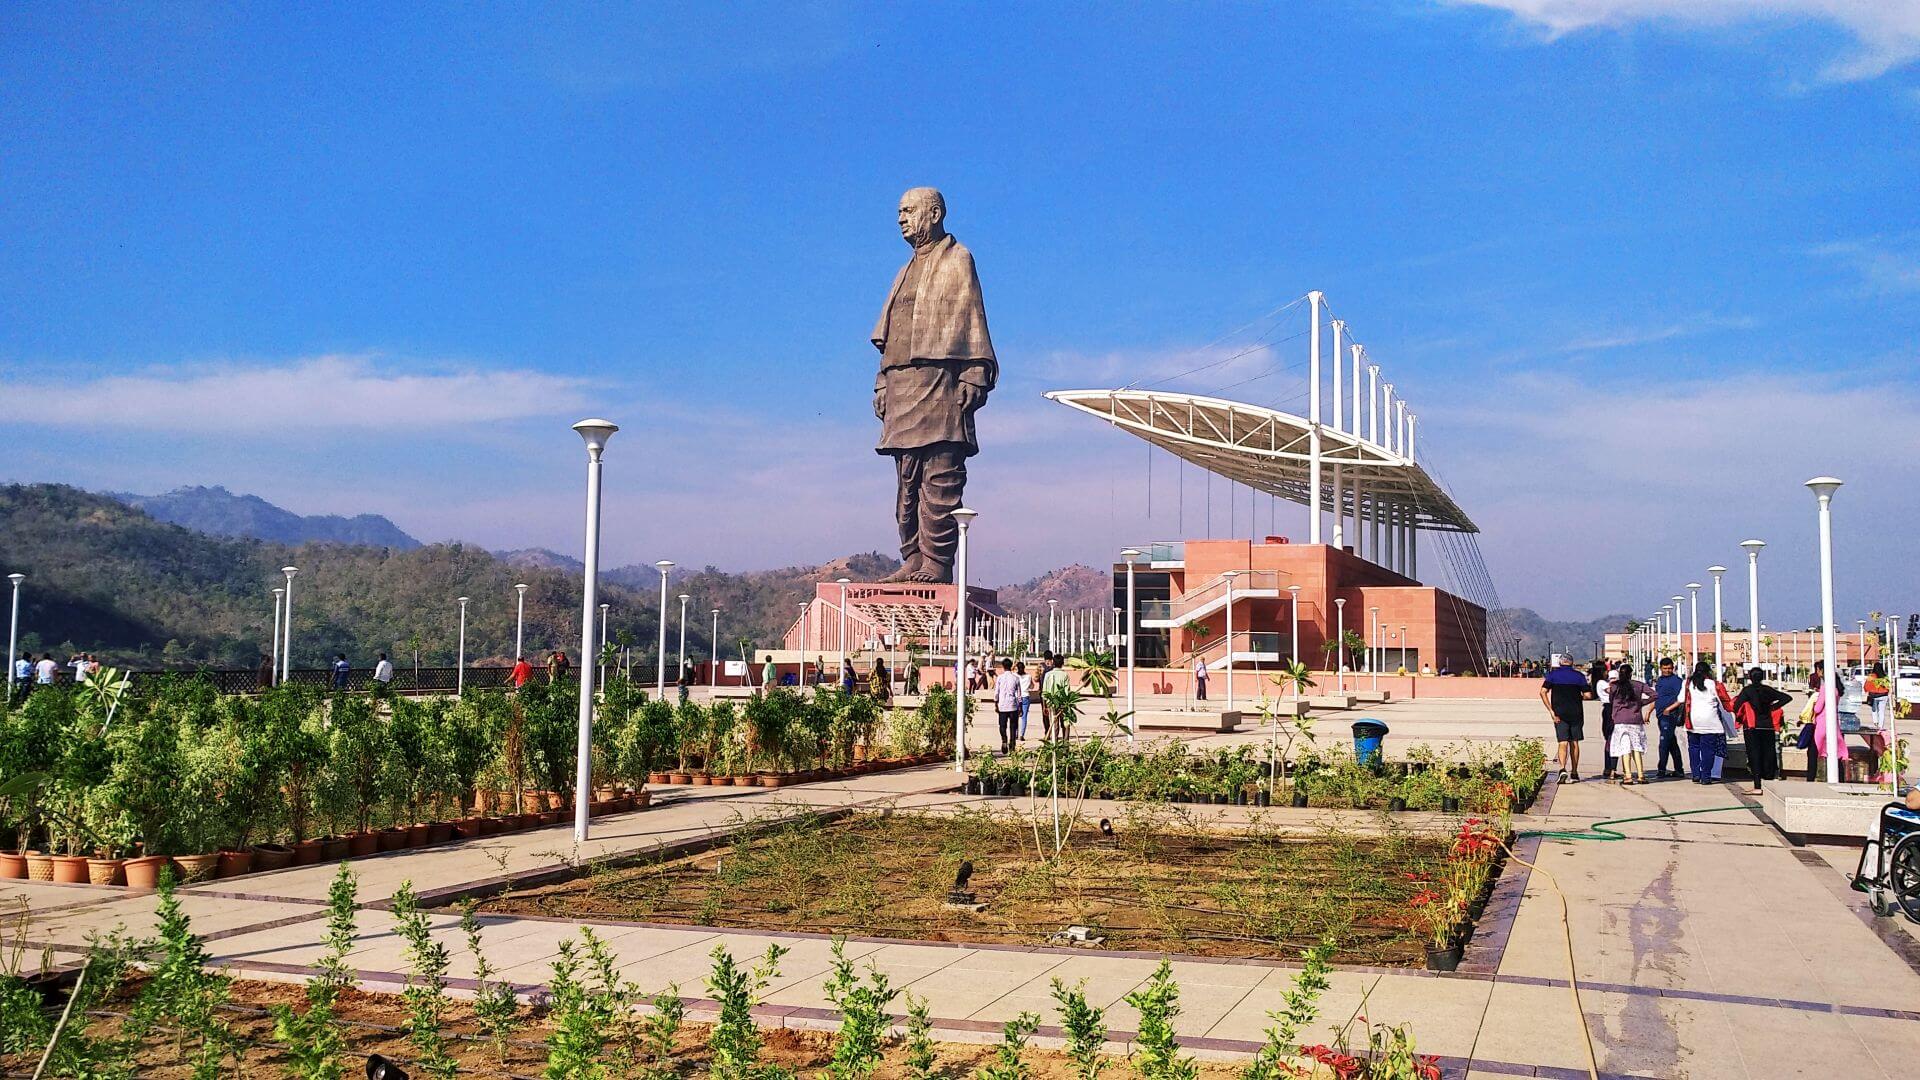 statue of unity india